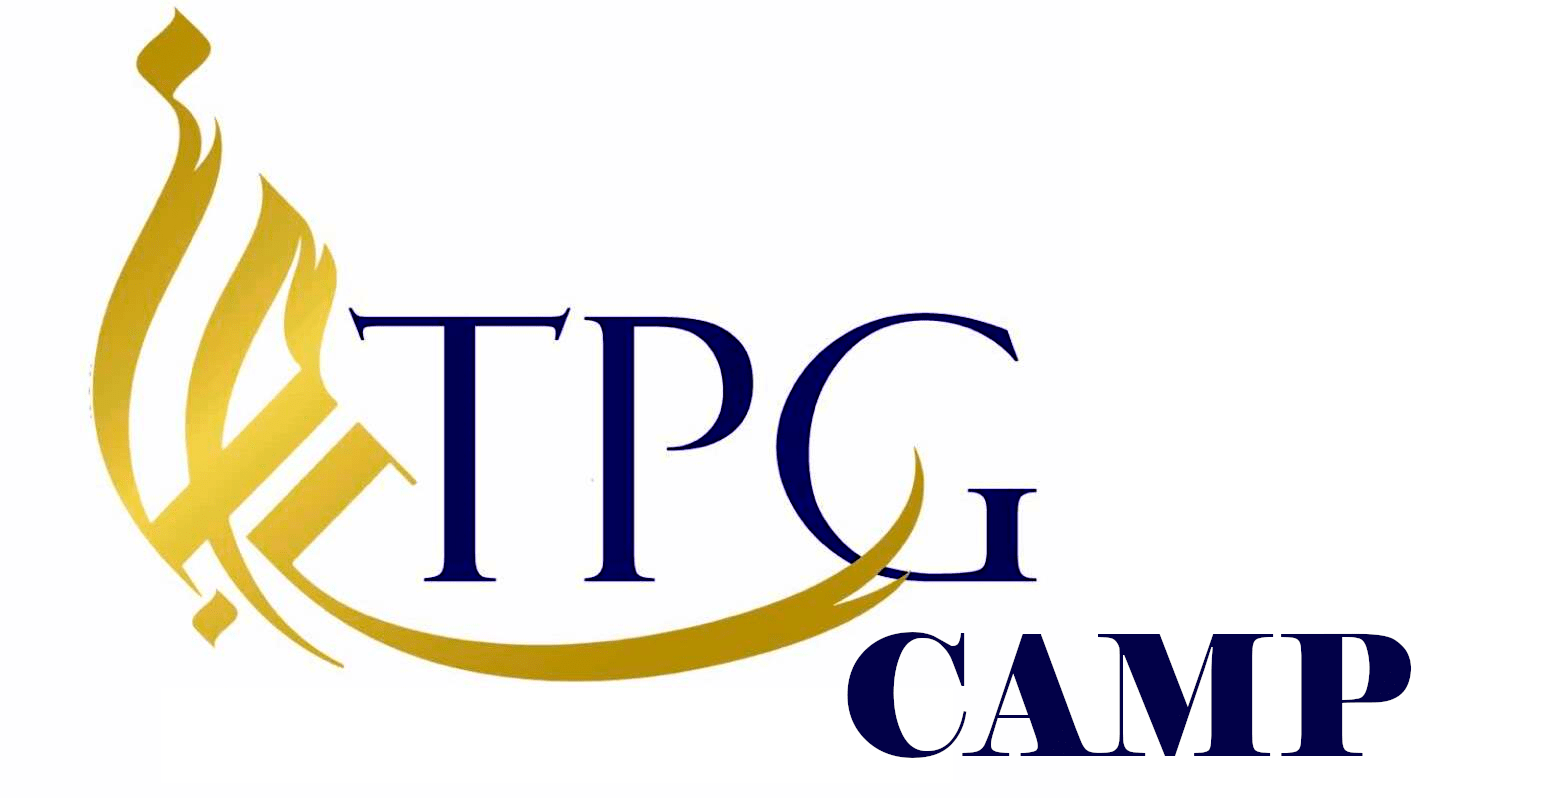 TPG Camp